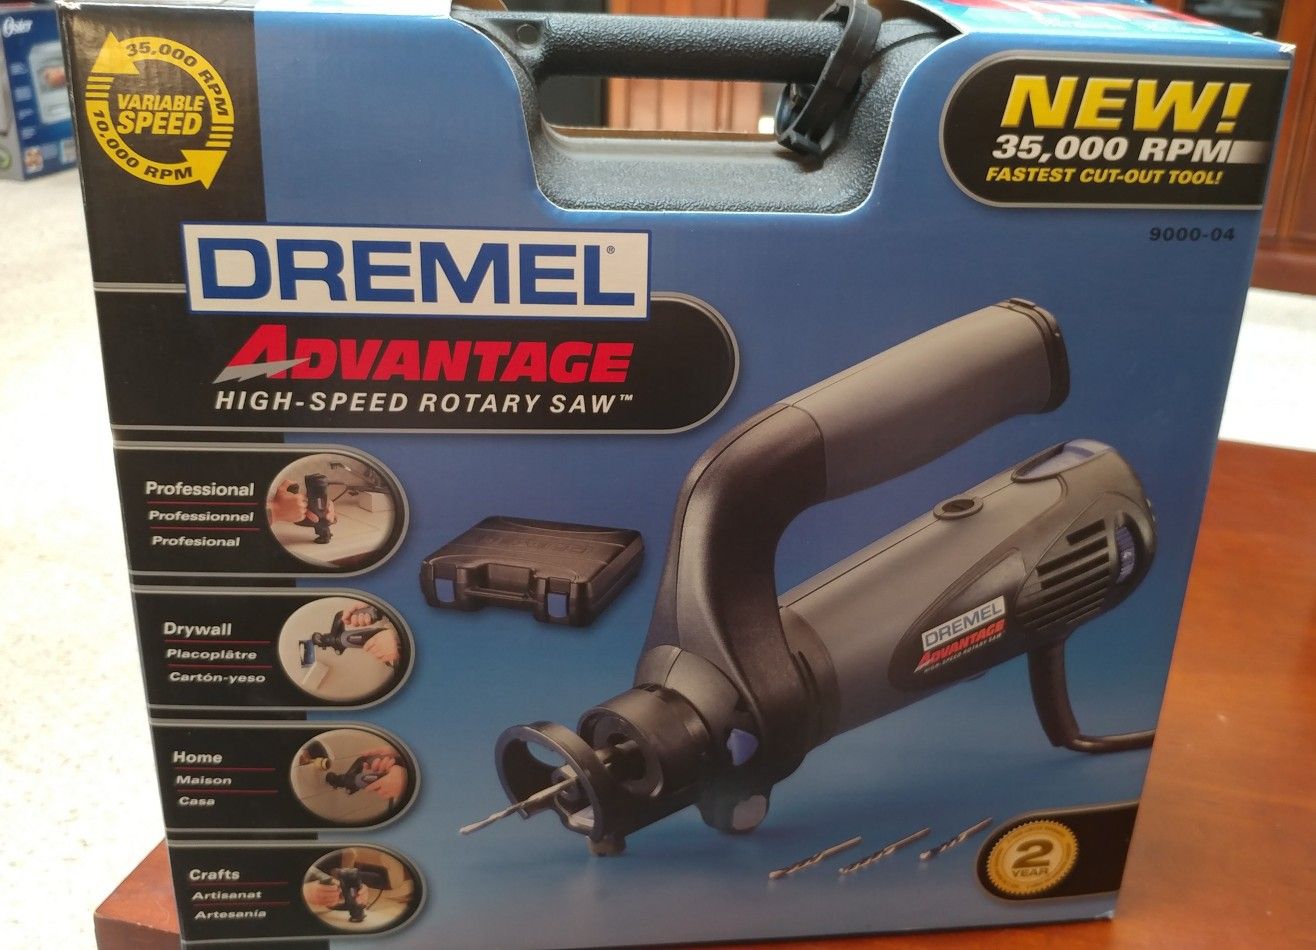 Dremel 9000-04 Advantage High-Speed Rotary Saw